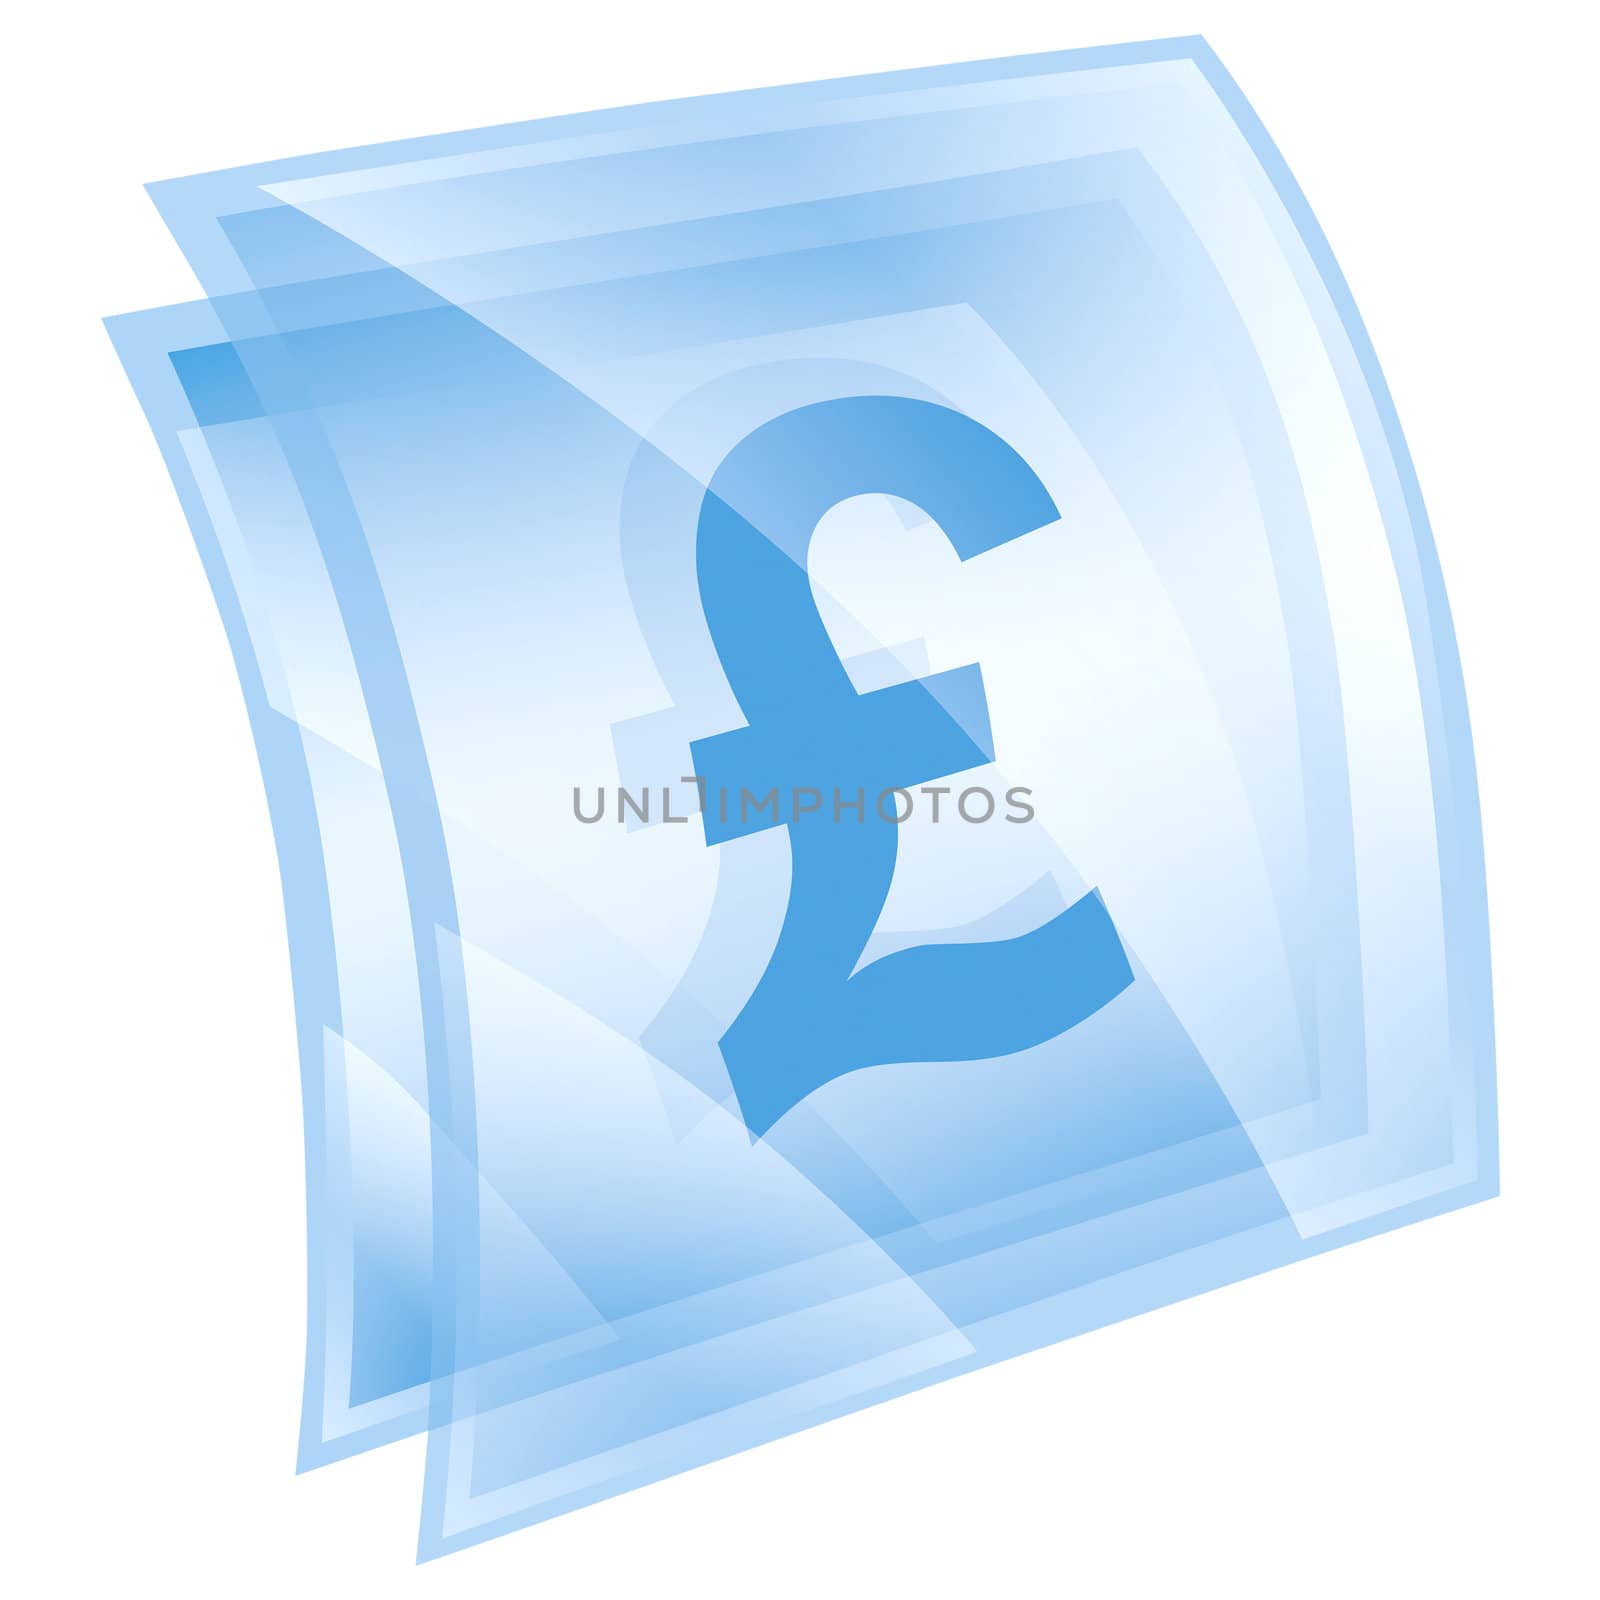 Pound icon blue square, isolated on white background